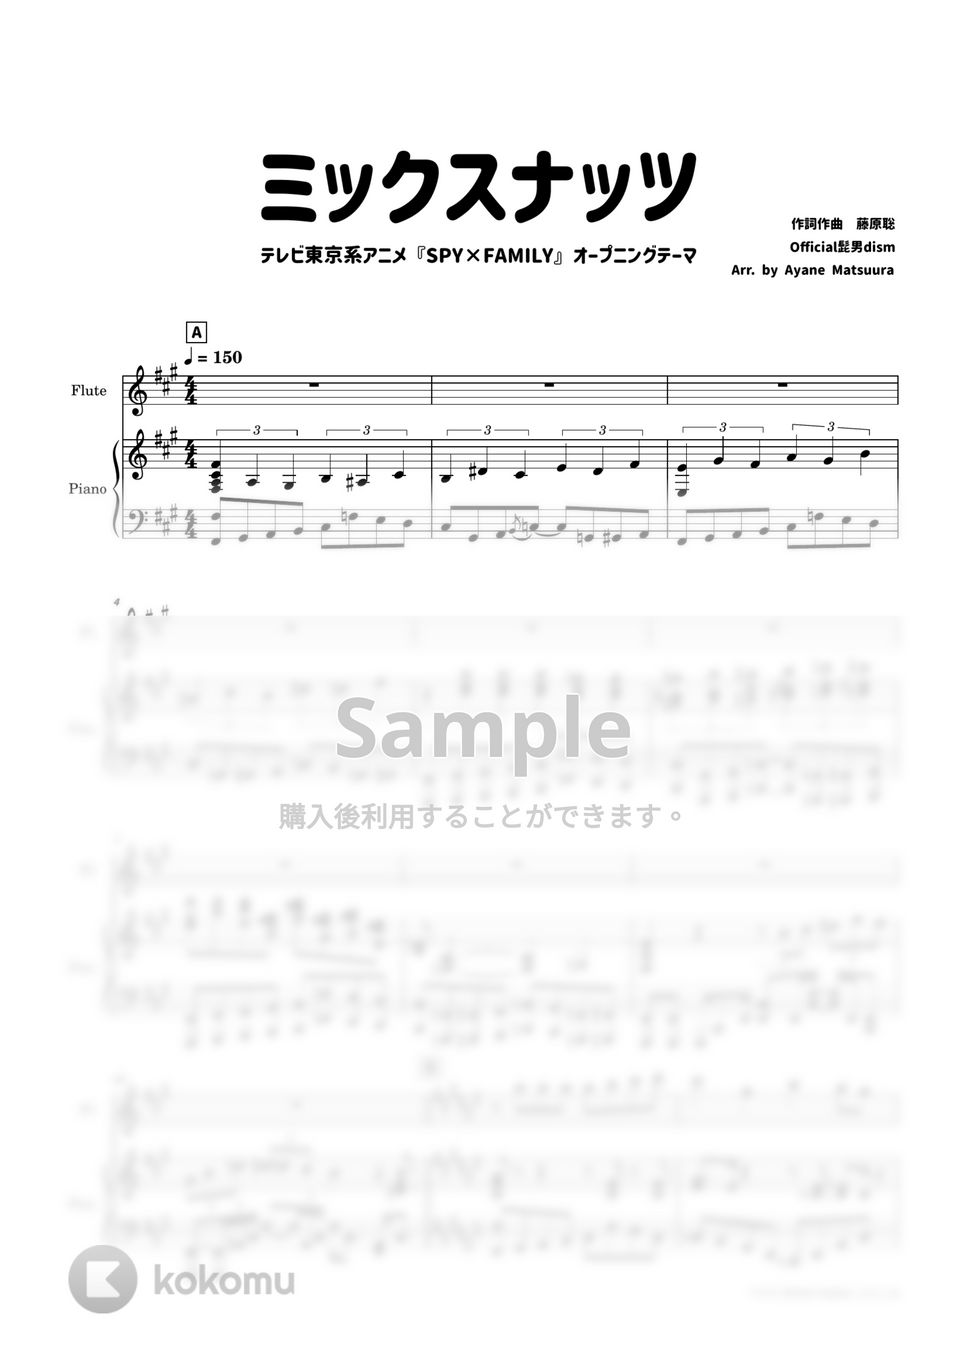 Official髭男dism - 【フルート＆ピアノ】原調ミックスナッツ（Official髭男dism） by 管楽器の楽譜★ふるすこあ